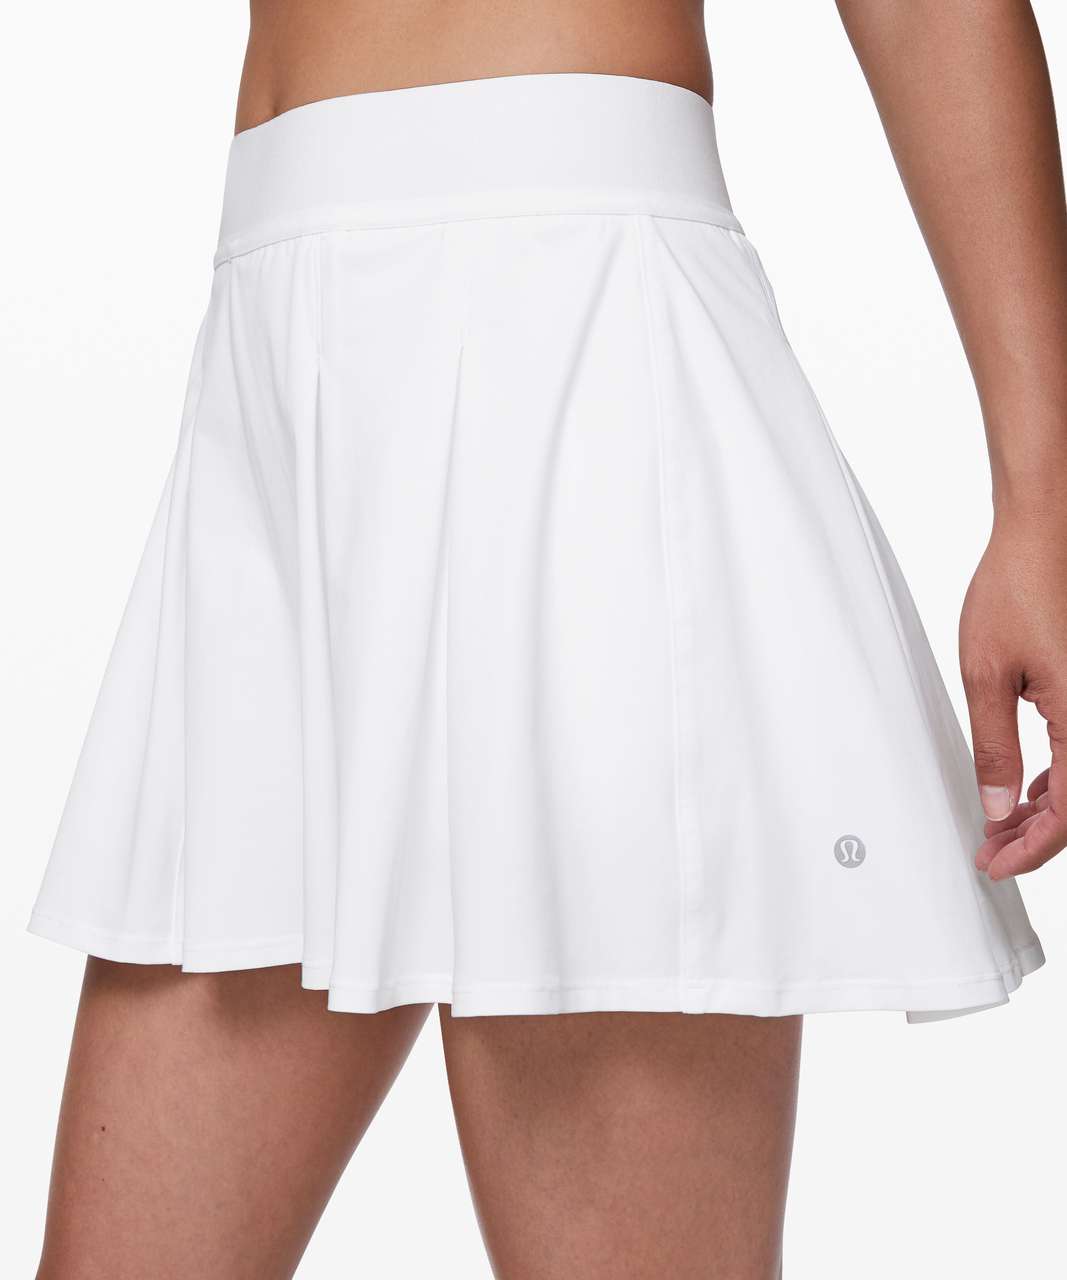 Lululemon Tennis Skirt Outfit  International Society of Precision